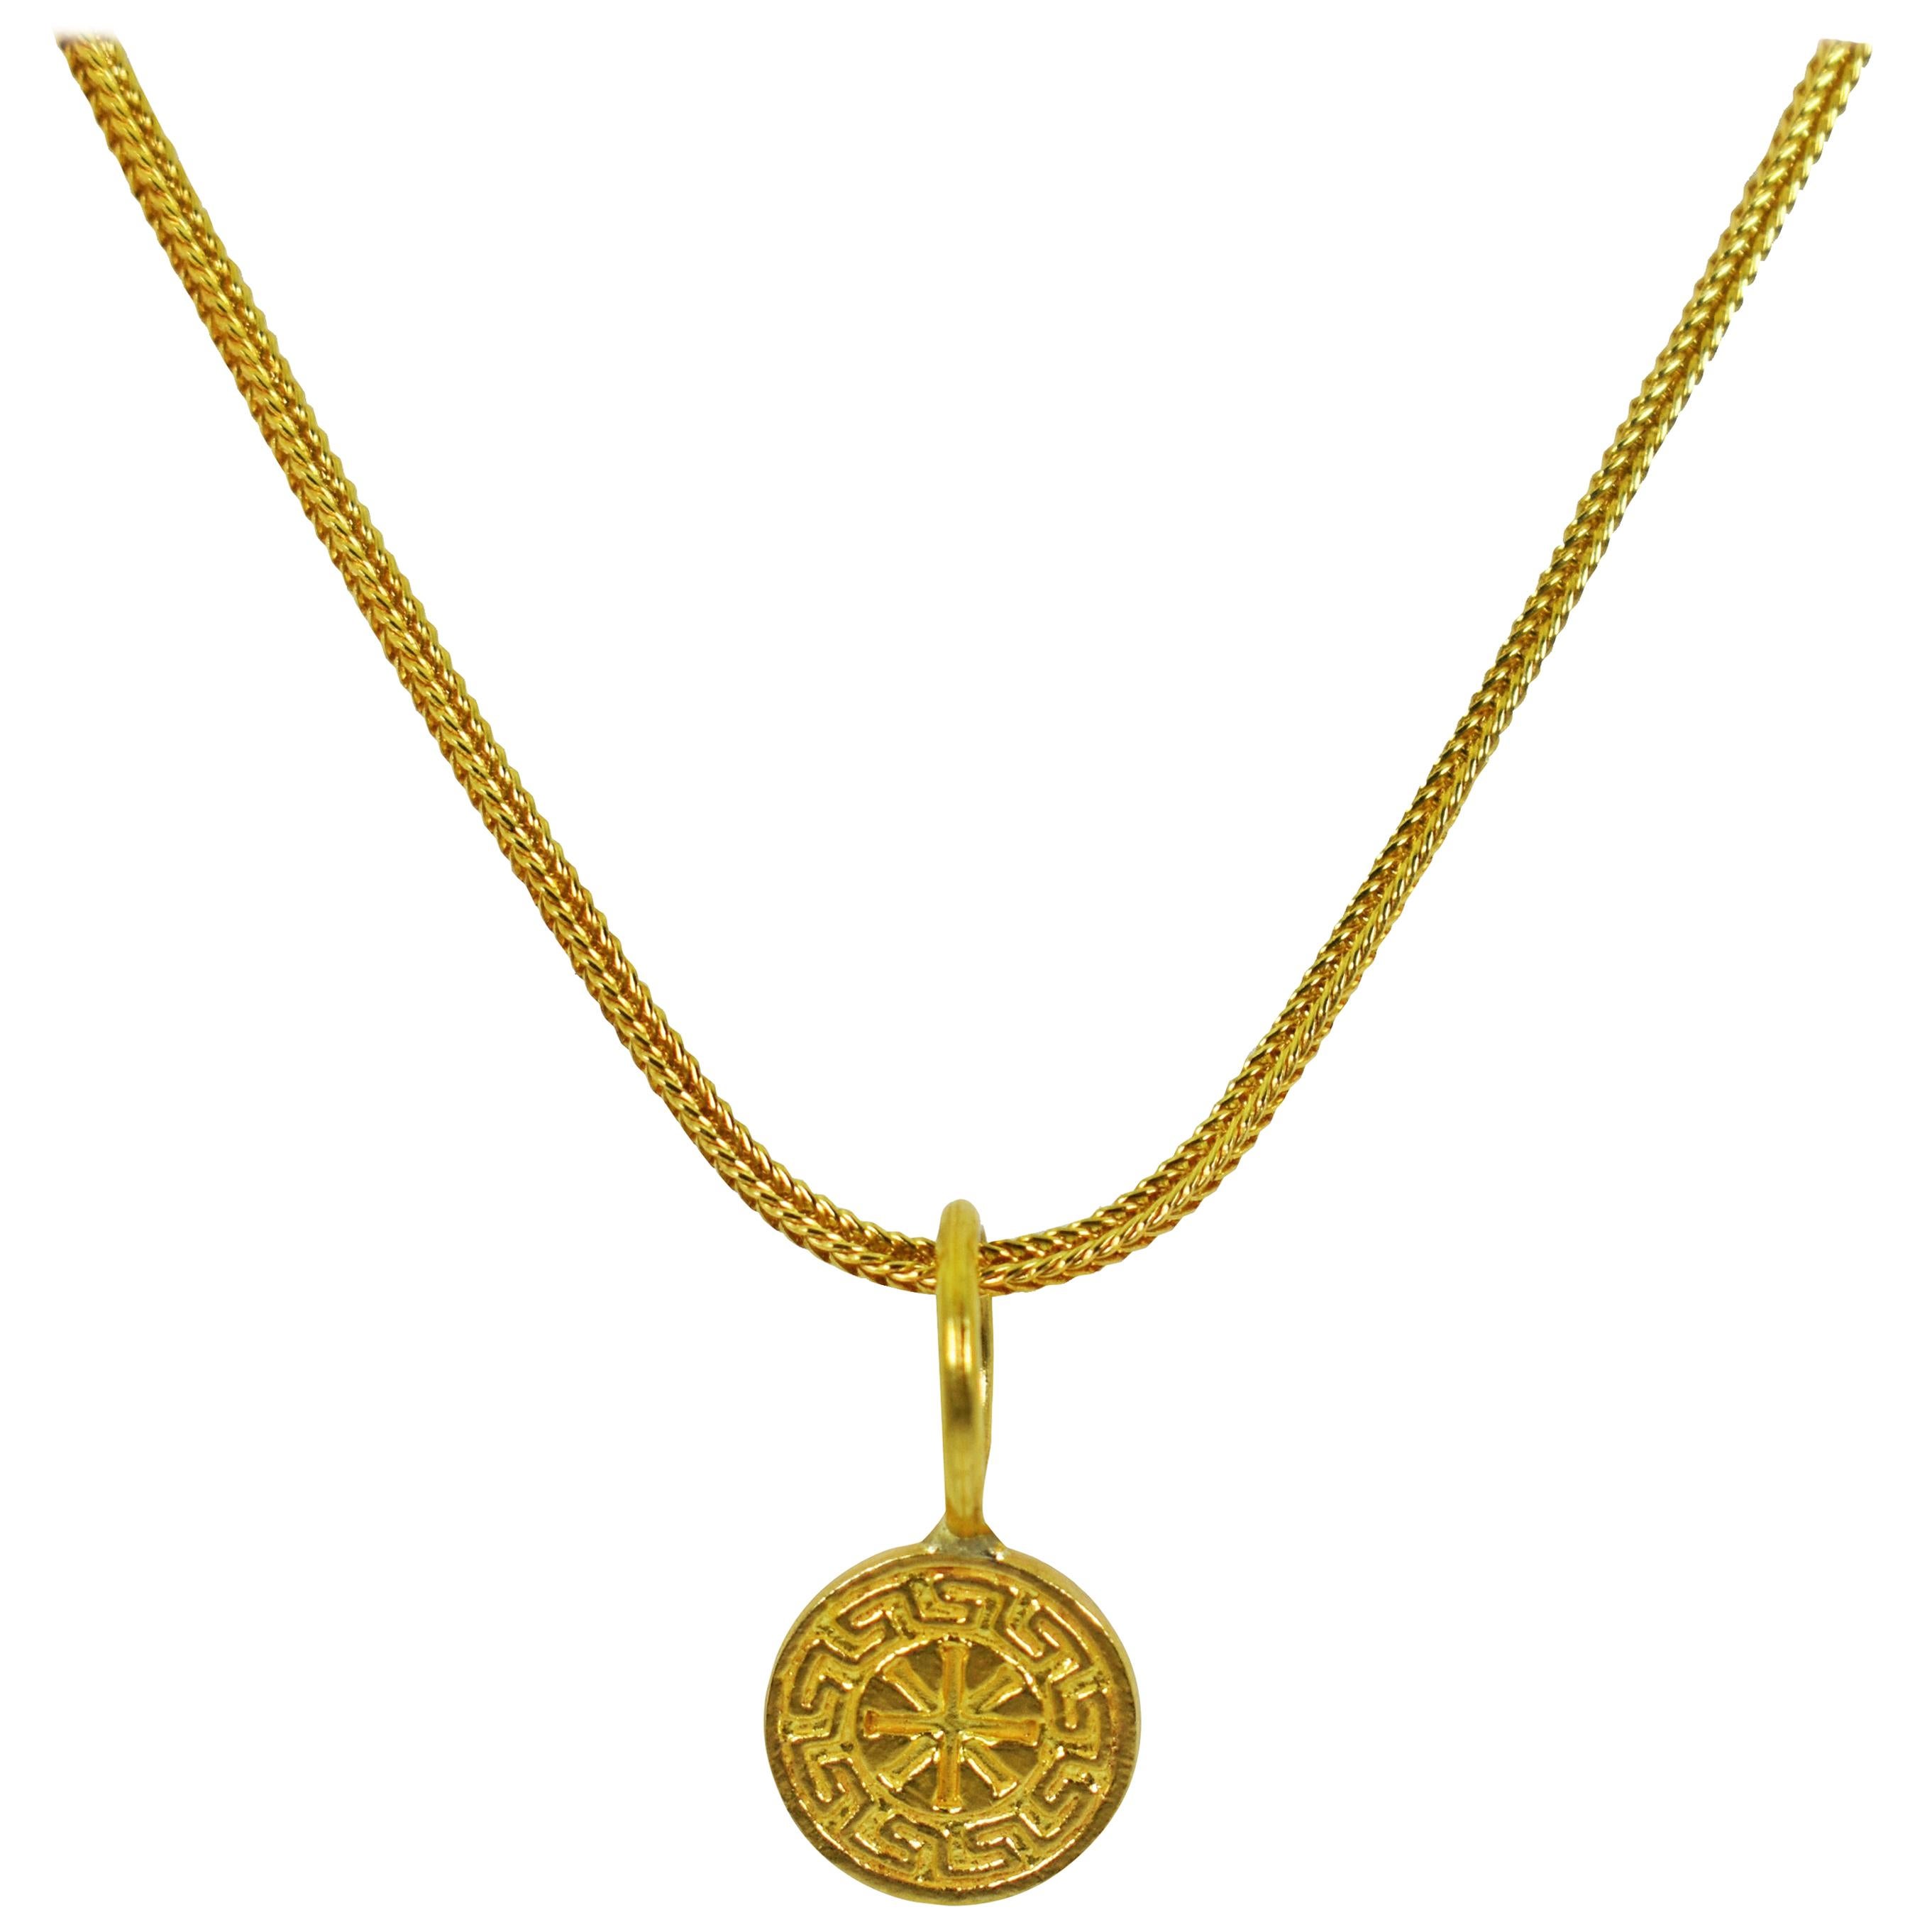 22 Karat Gold Ixthus Charm on 18 Karat Chain Necklace